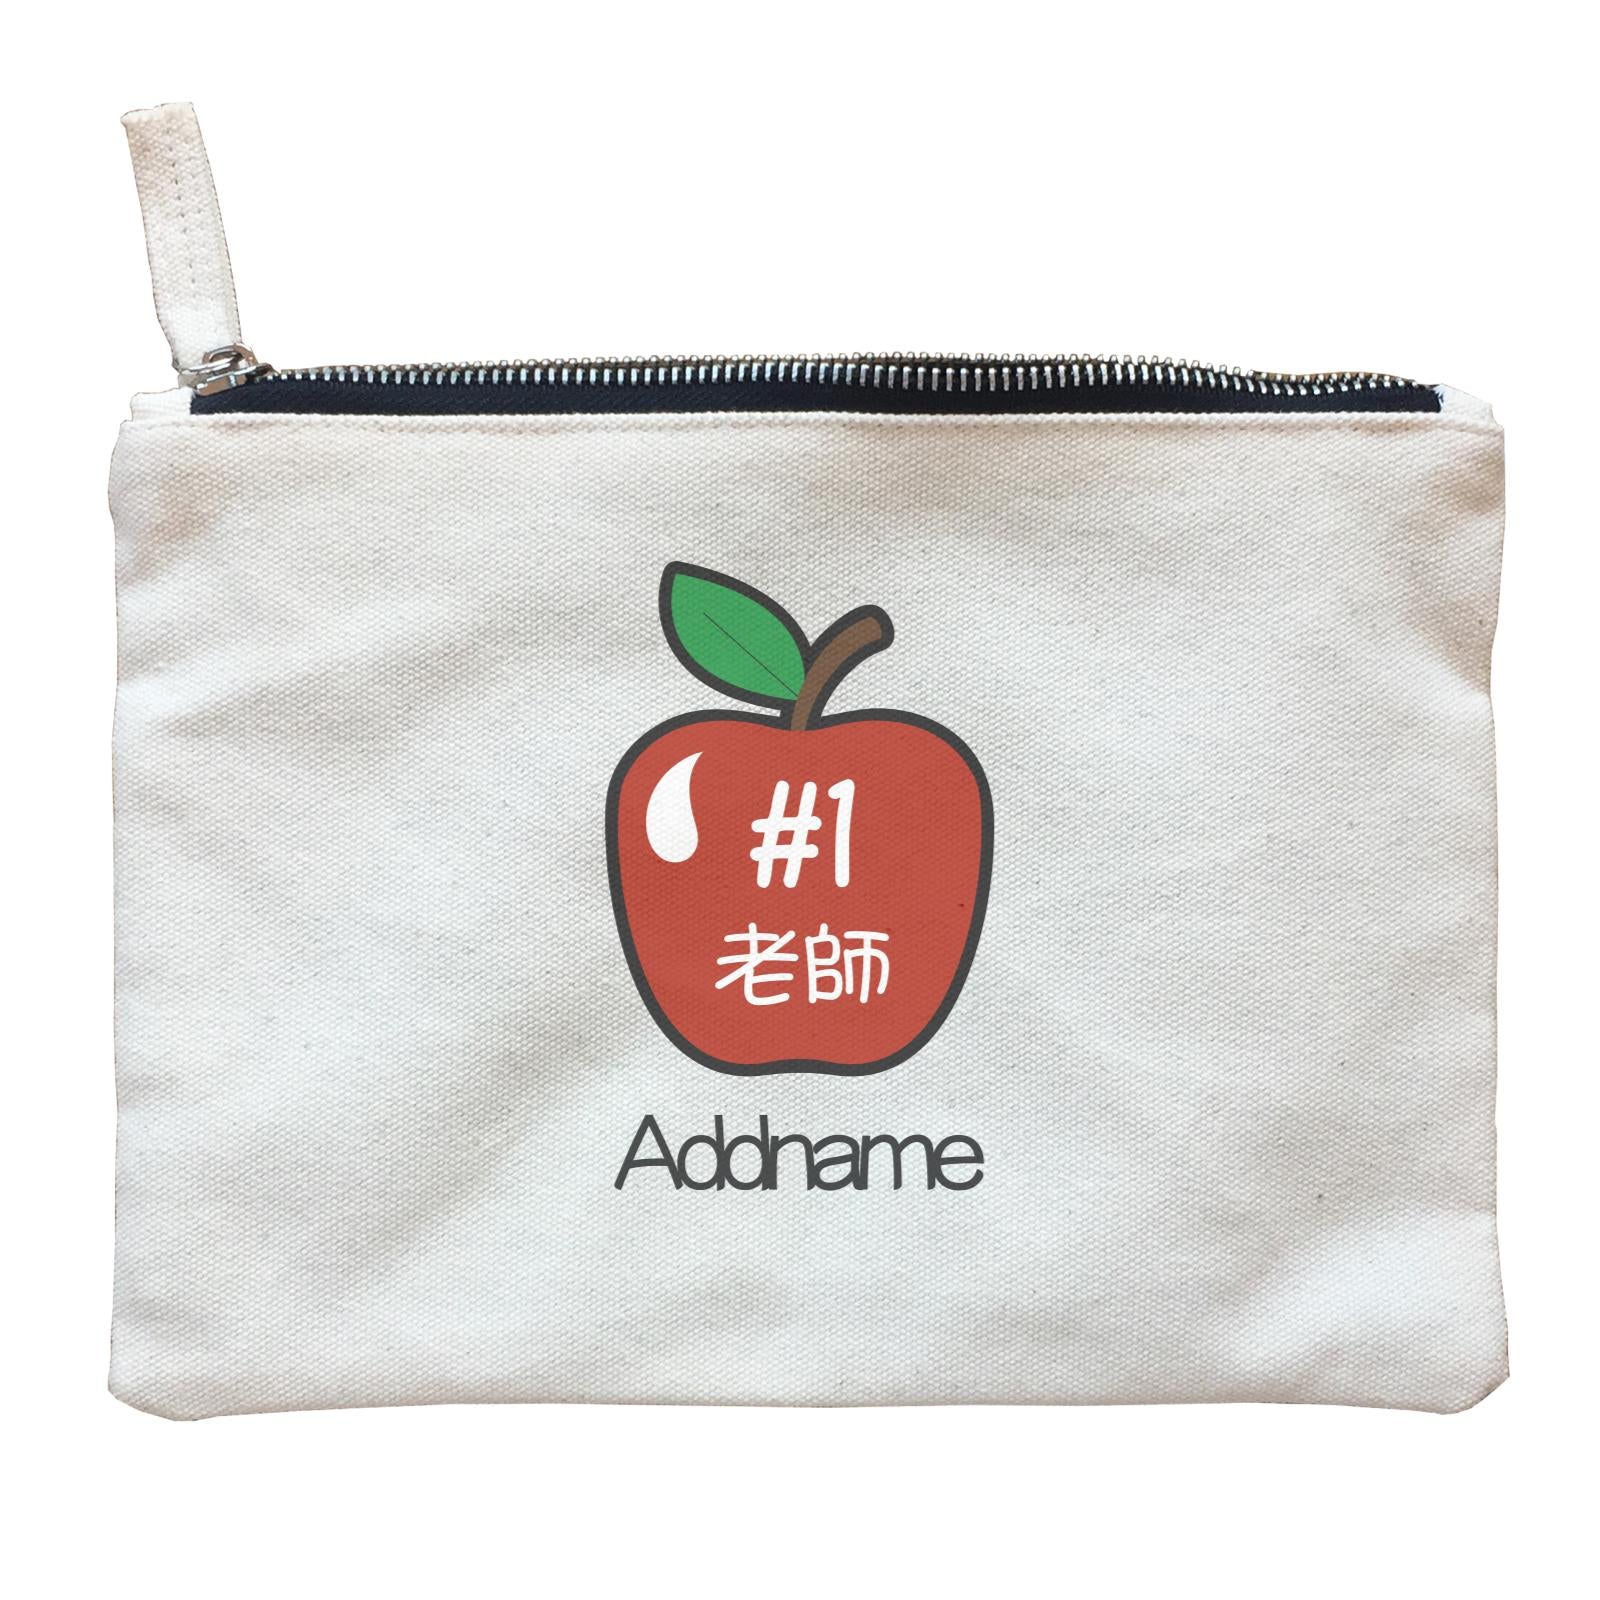 Hashtag 1 Apple Chinese Teacher Addname Zipper Pouch